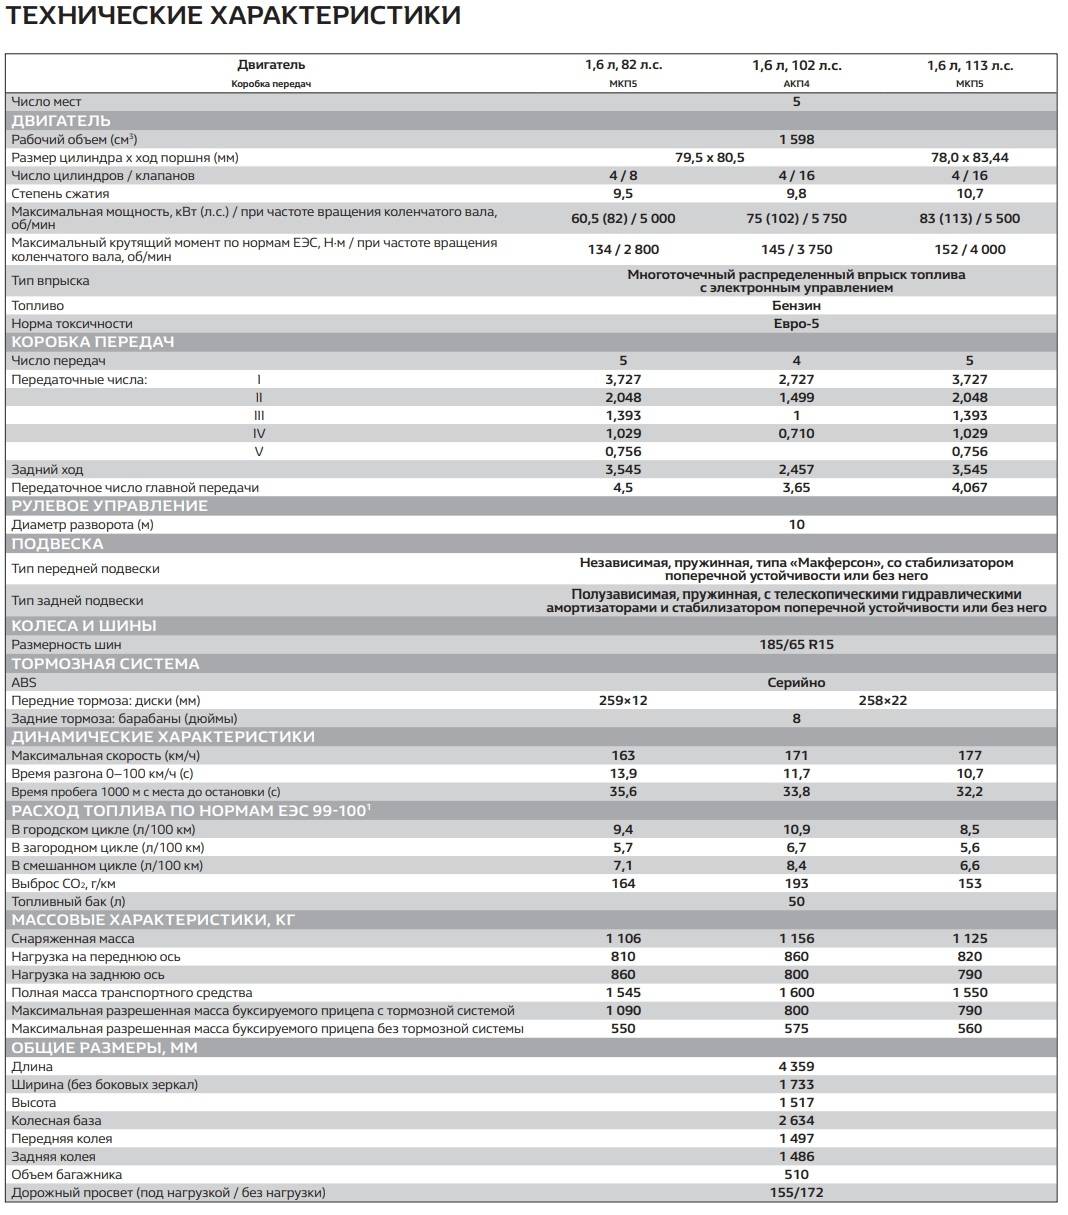 Рено Логан 2009 — характеристики, отзывы и цена